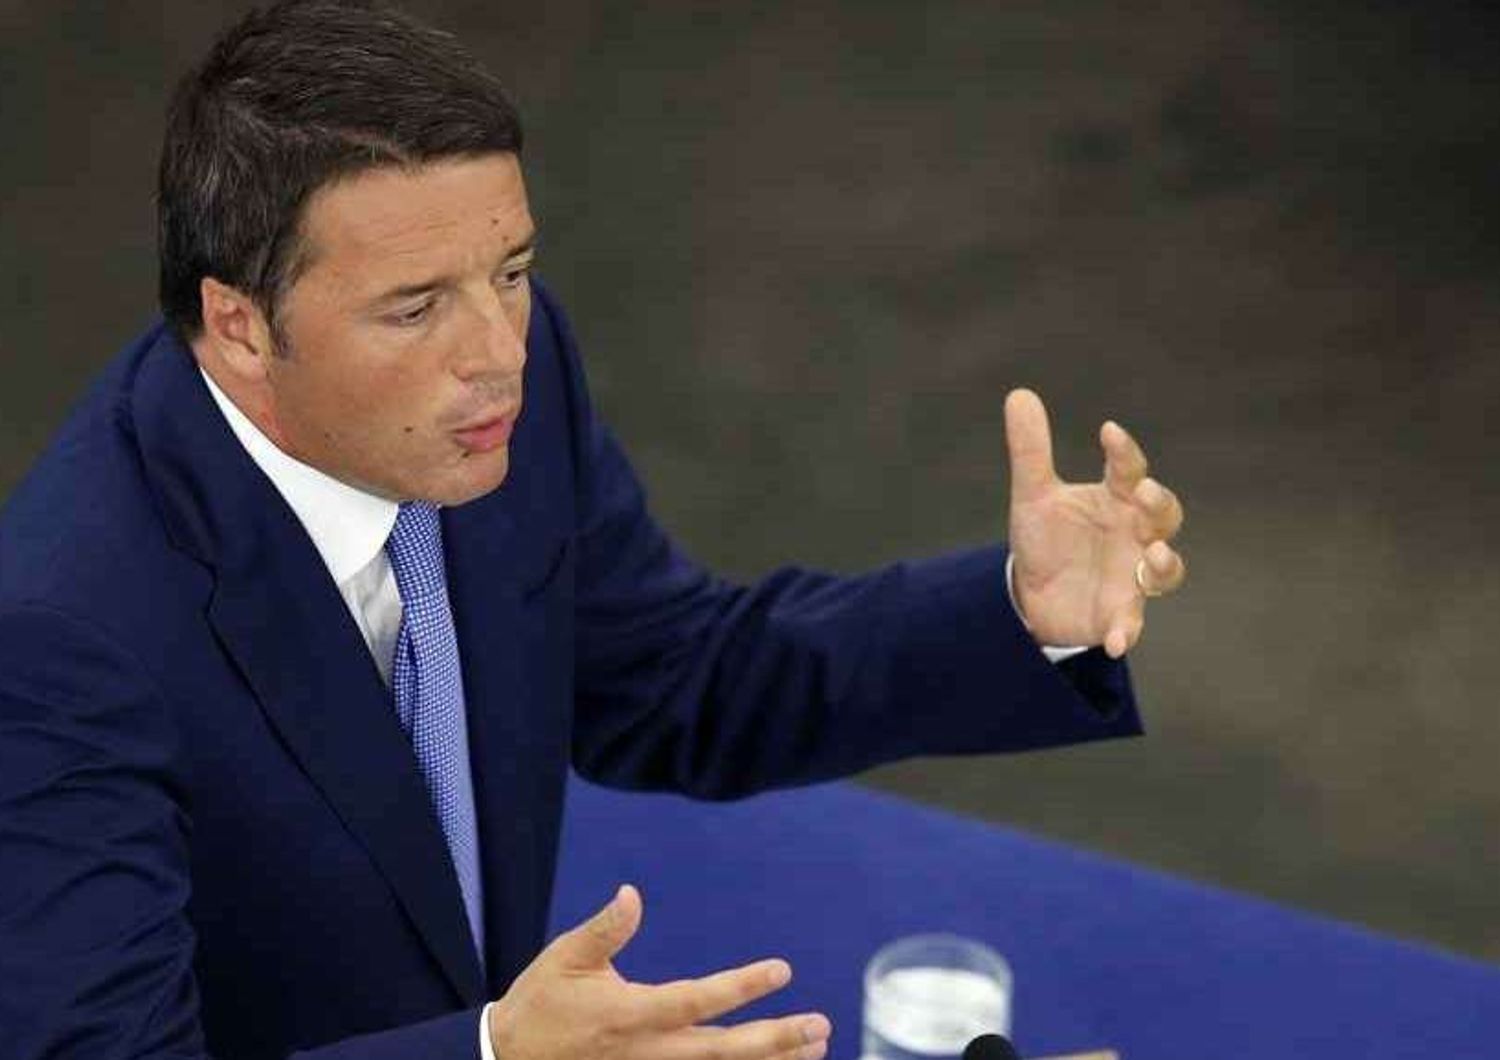 In Ue scontro Renzi-Ppe su flessibilita'. Juncker ora rischia